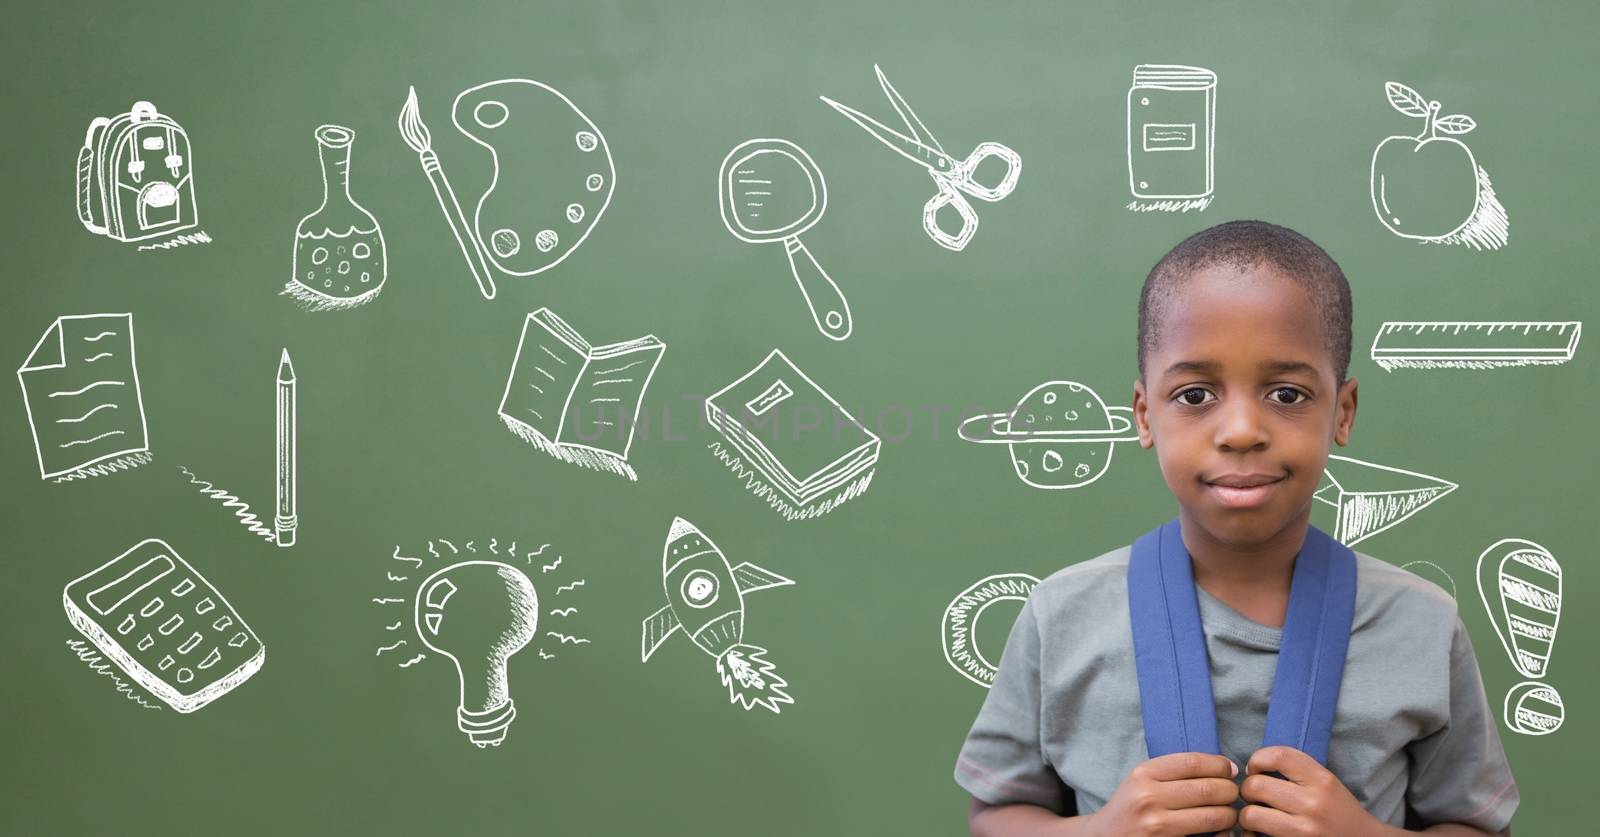 Digital composite of School boy and Education drawing on blackboard for school